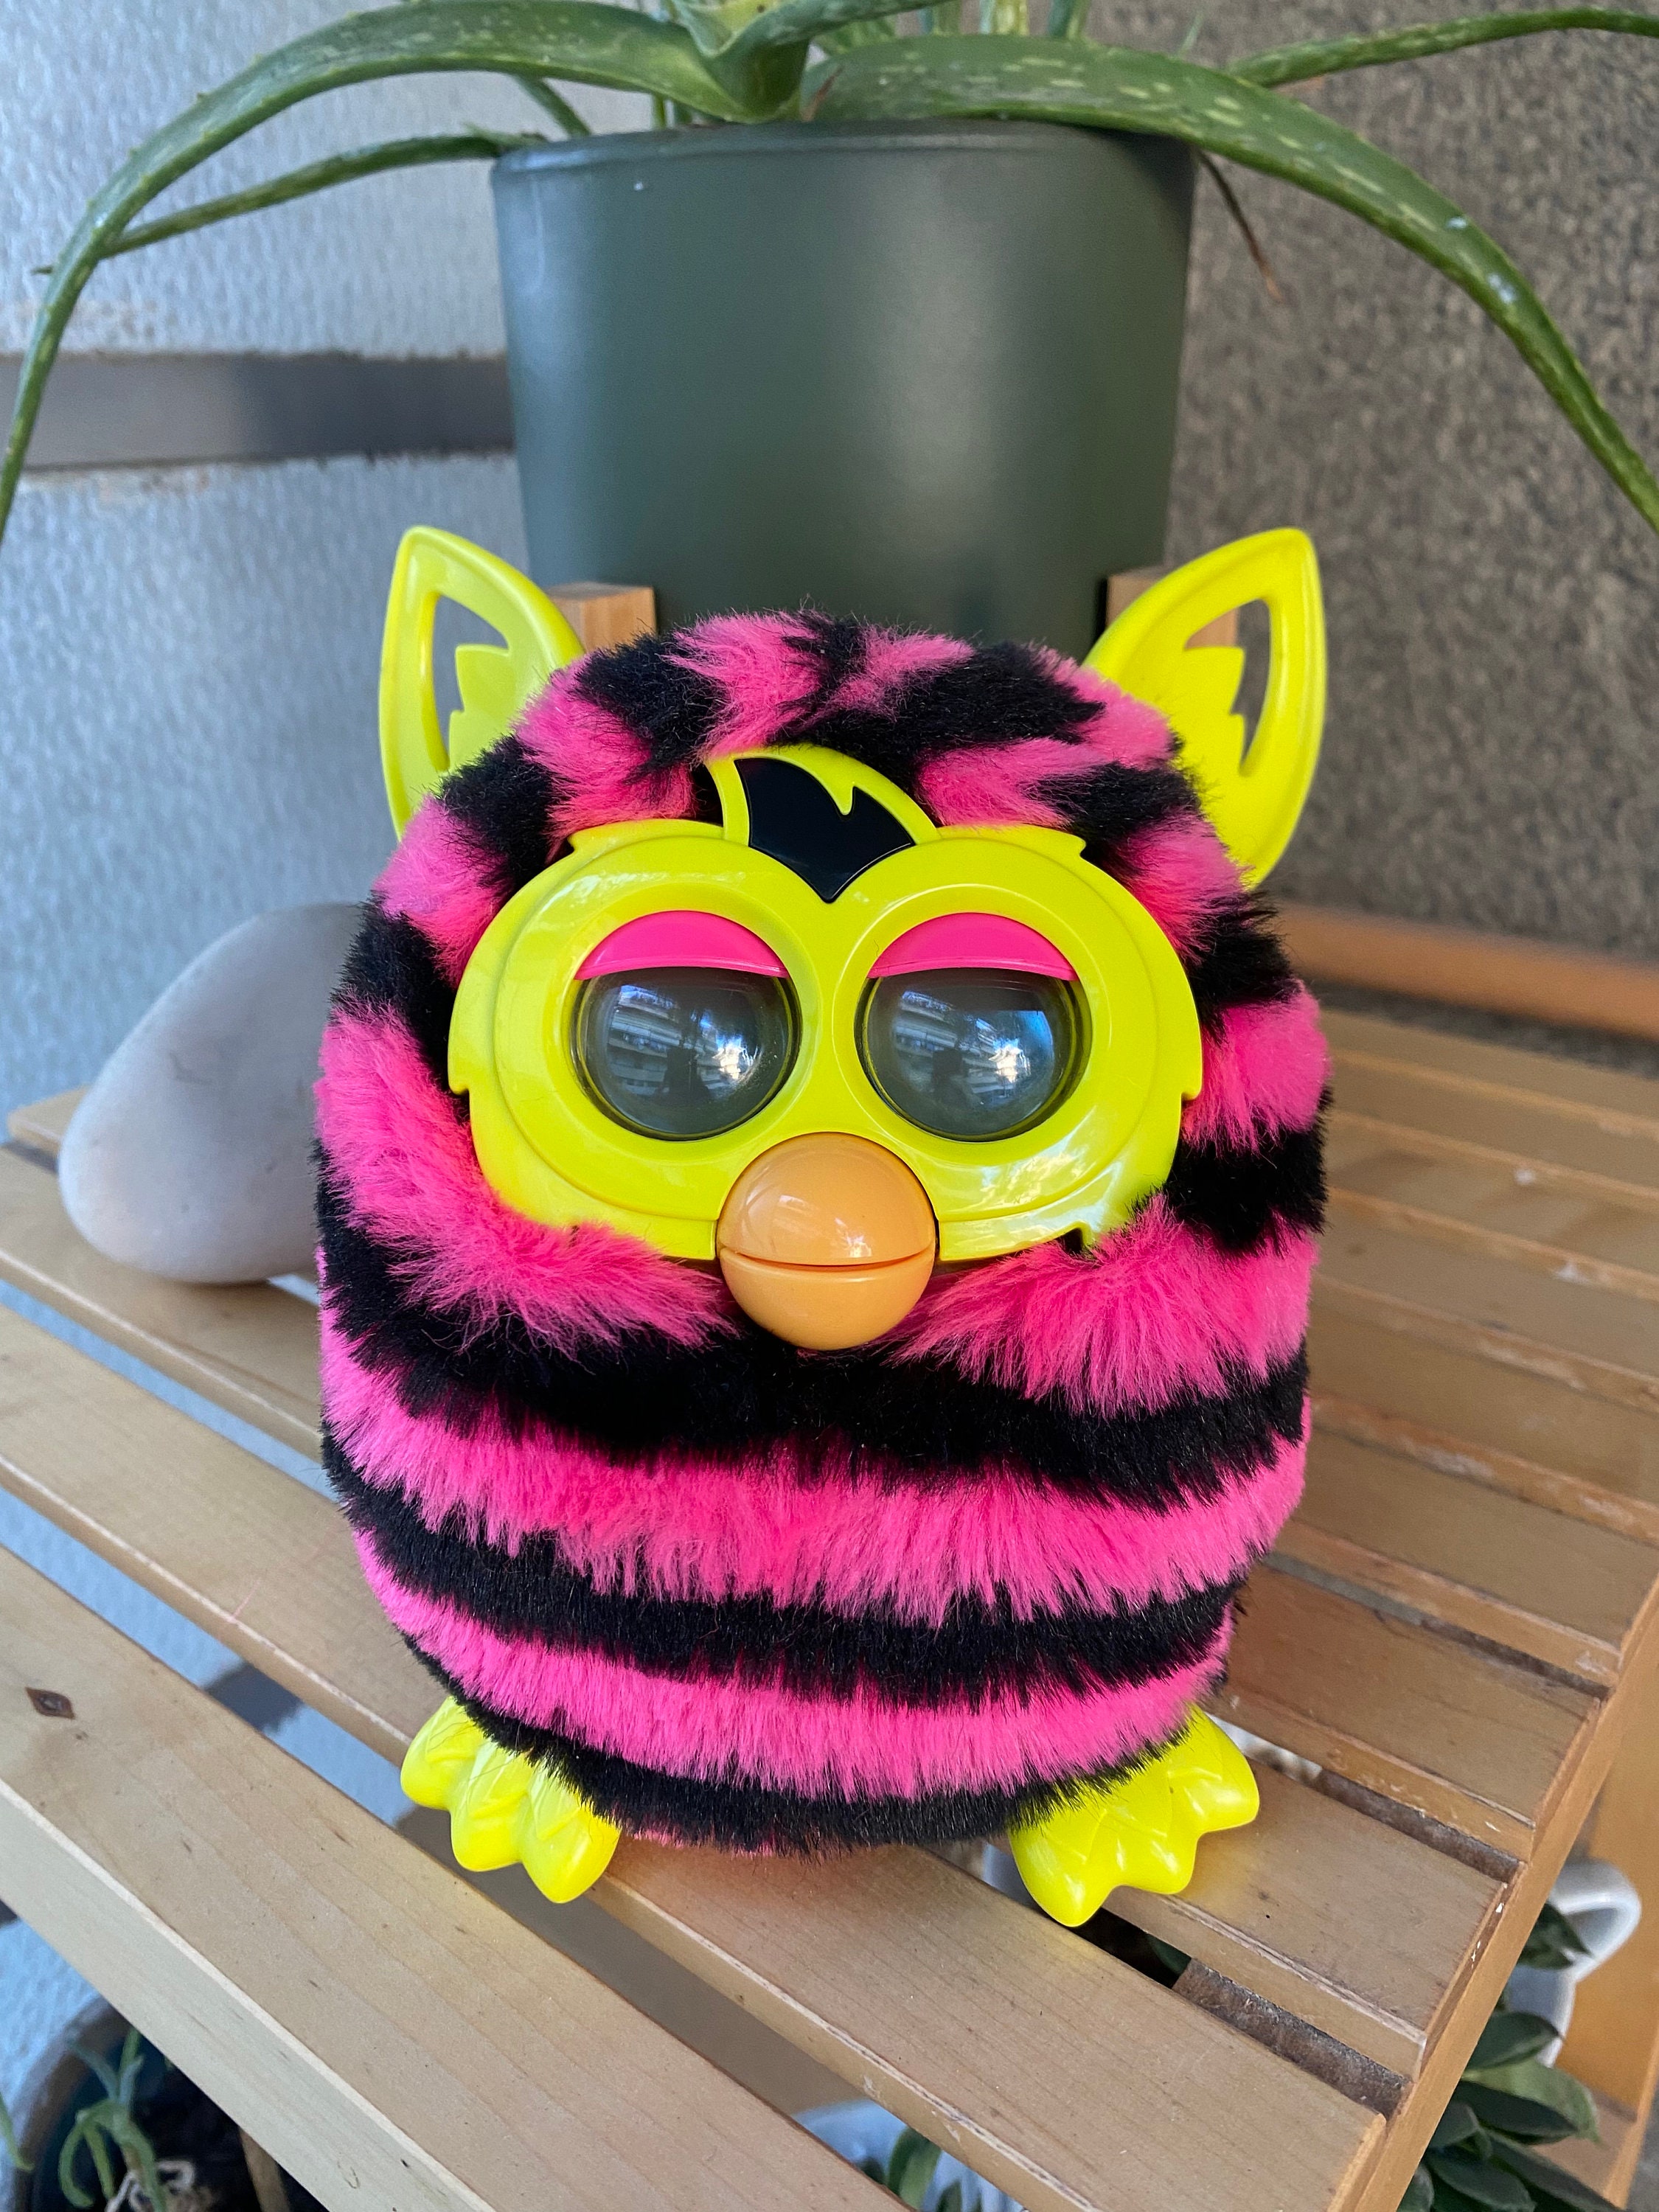 2013 Hasbro Furby Furbling Mini Baby Pink Black Yellow Interactive Toy  Working